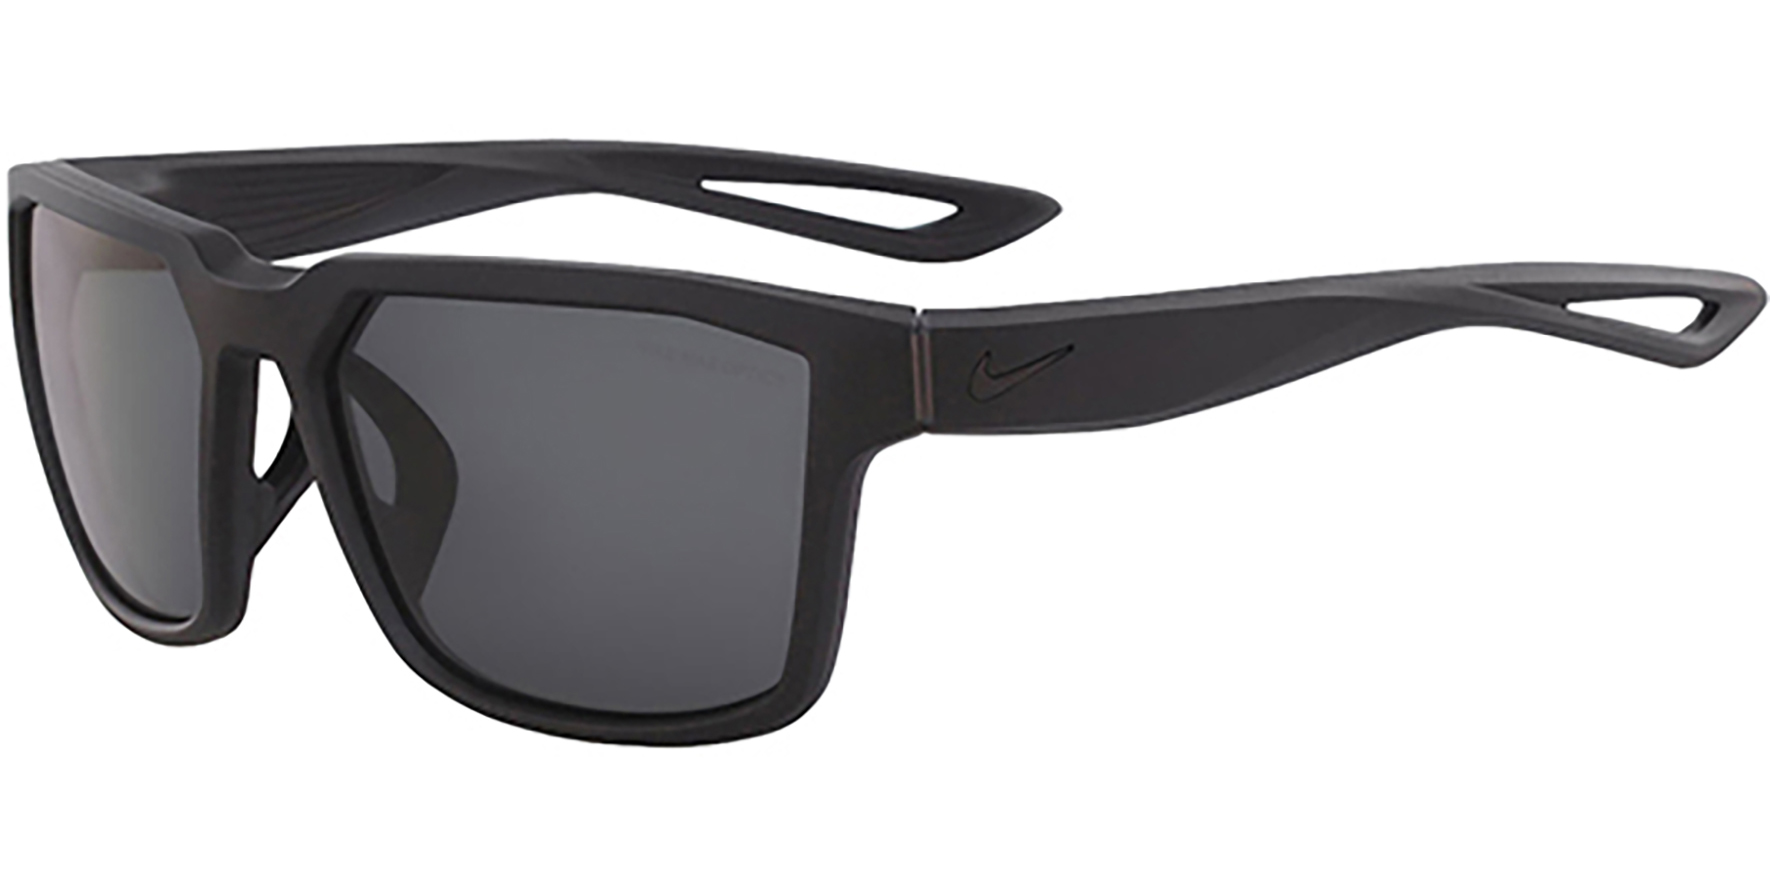 Nike Fleet Men's Matte Oil Grey Classic Square Sunglasses with Max Optics - image 1 of 4